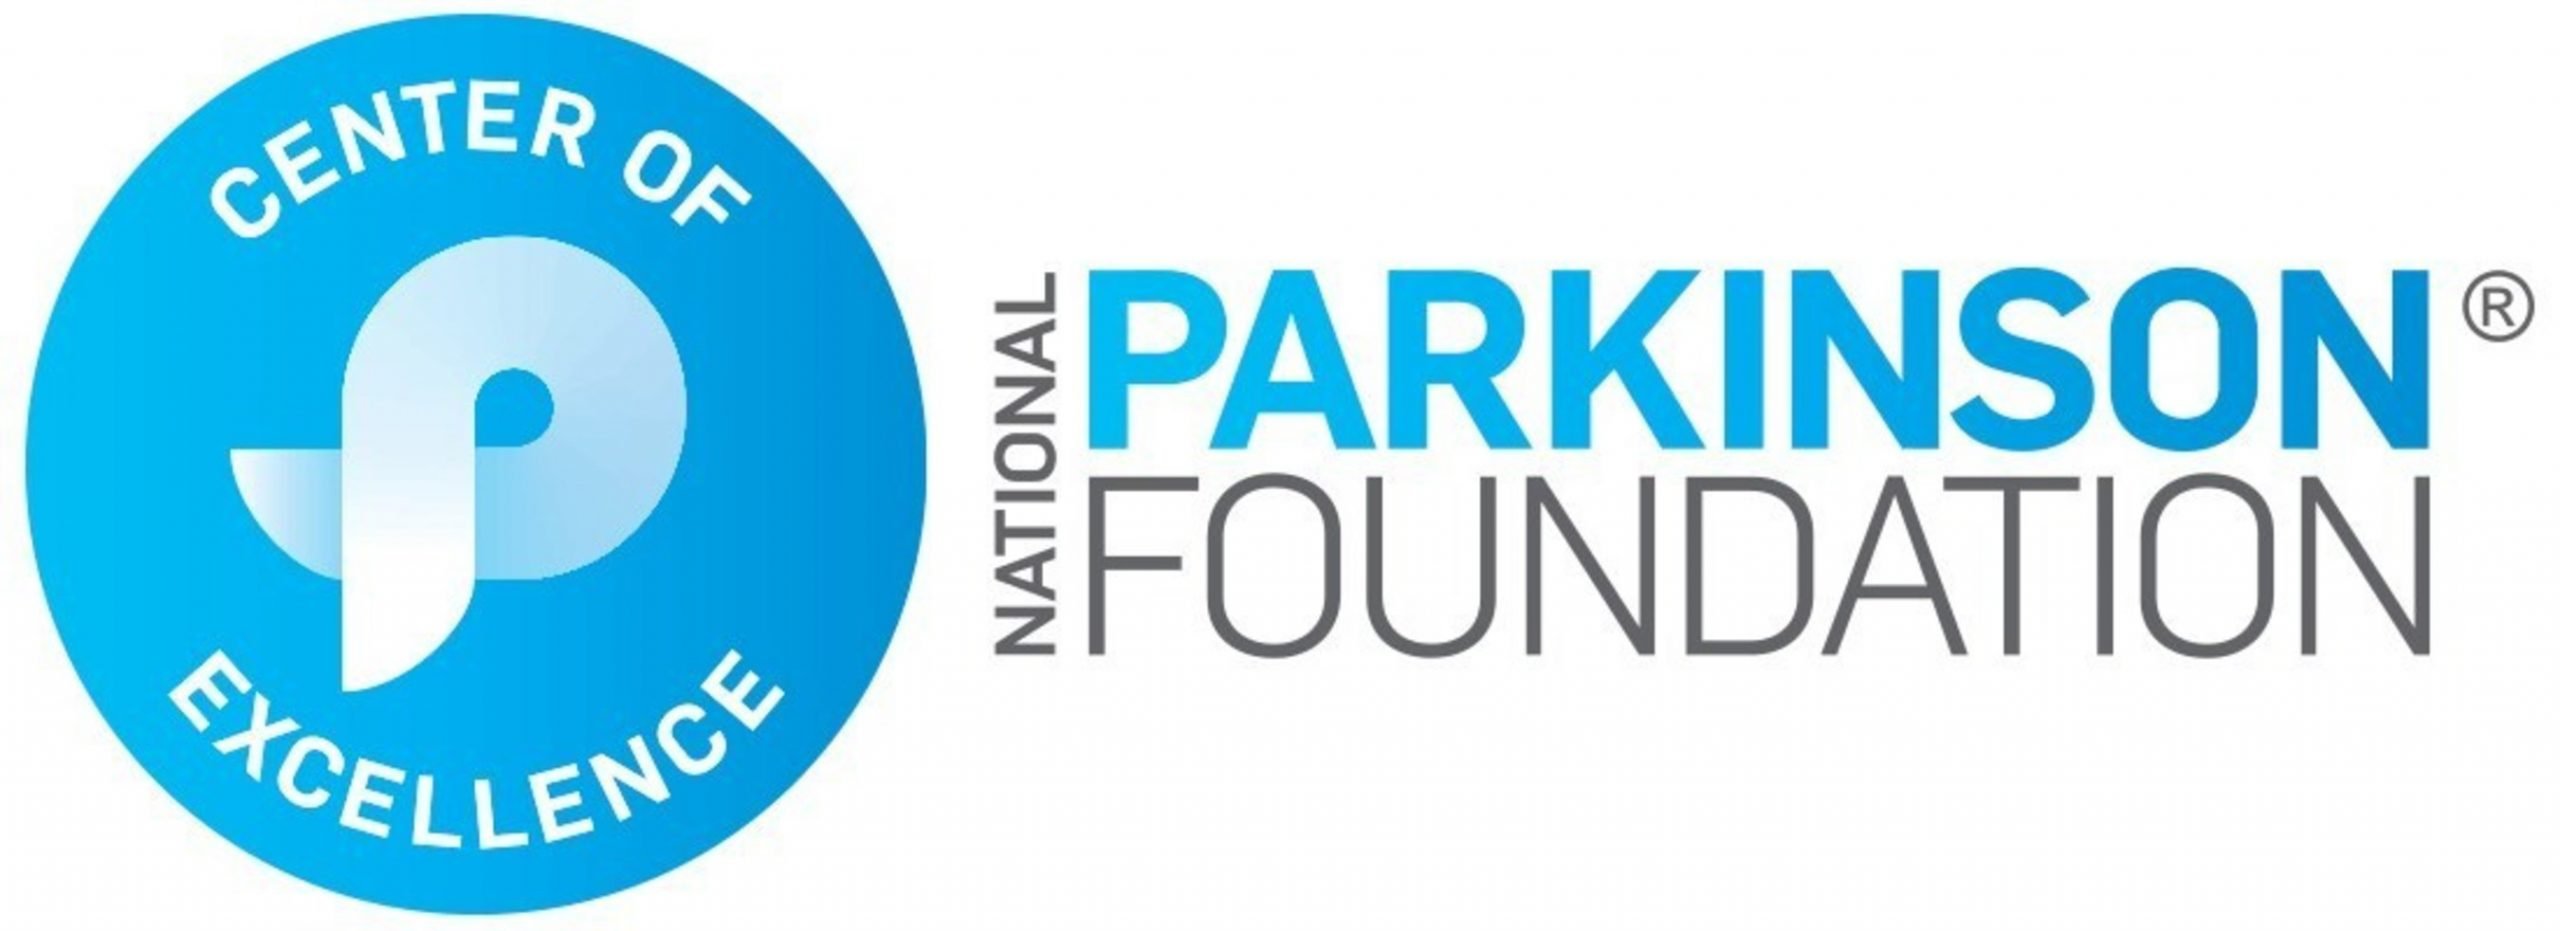 National Parkinson Foundation Expands Expert Care Network